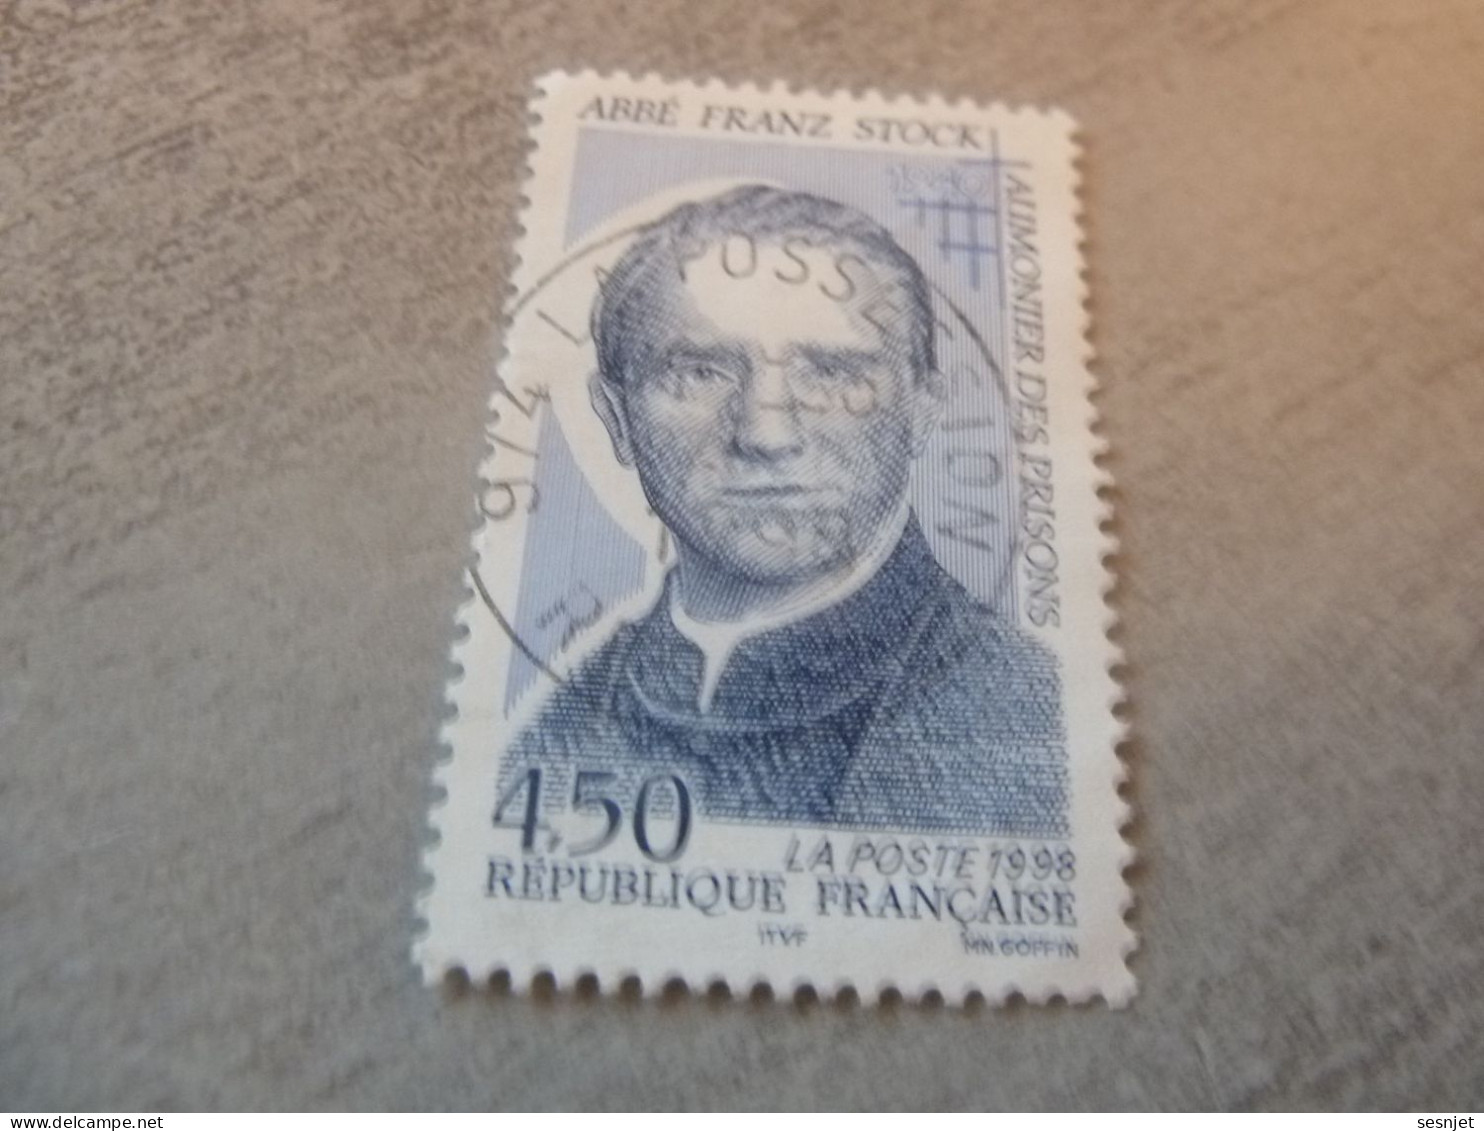 Abbé Franz Stock (1904-1948) Aumonier - 4f.50 - Yt 3138 - Bleu - Oblitéré - Année 1998 - - Usados